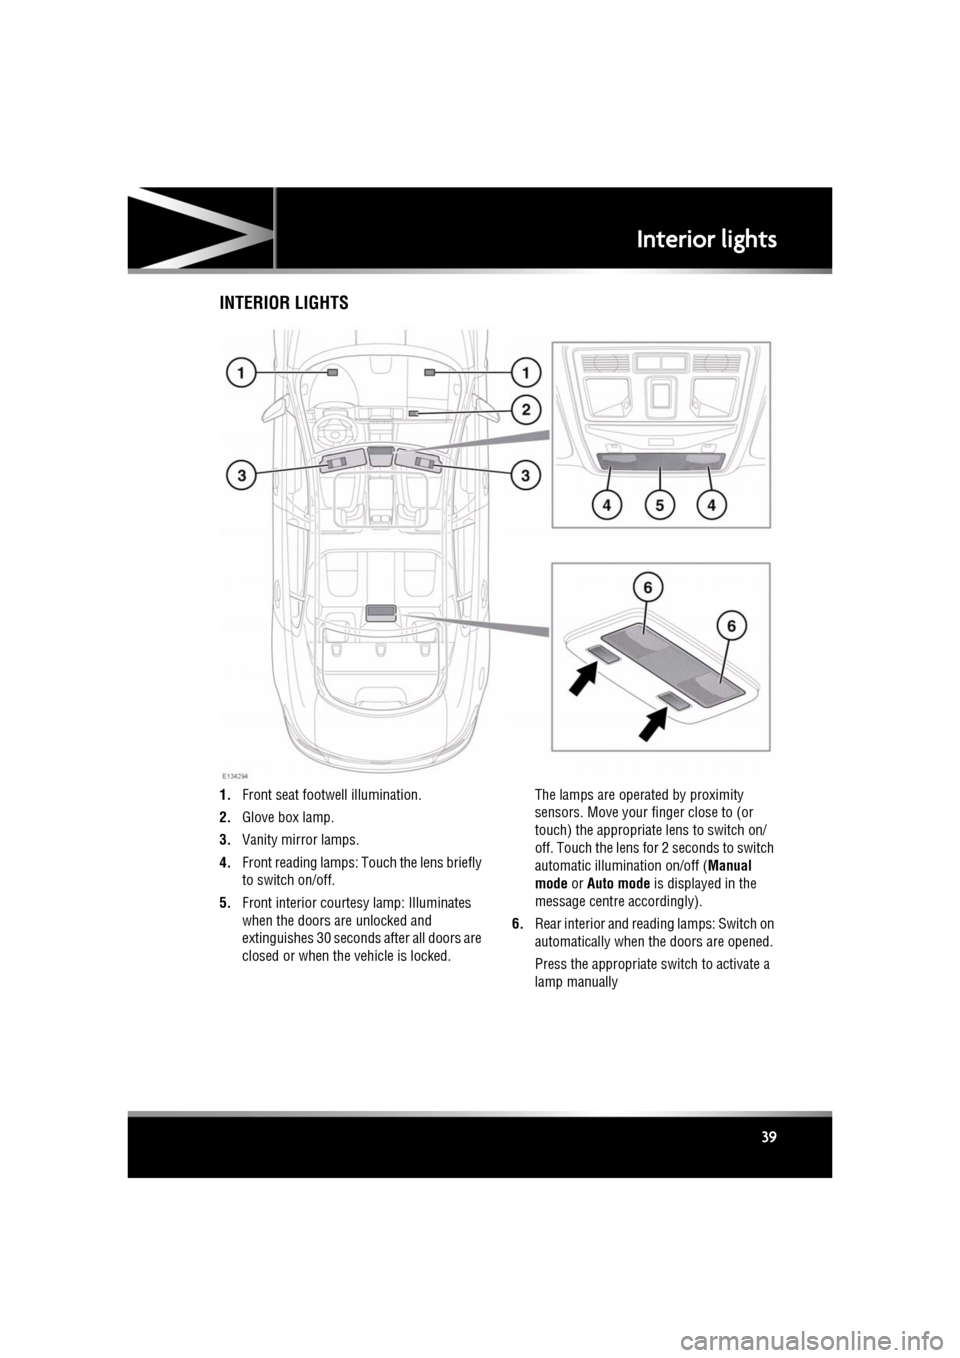 JAGUAR XF 2011 1.G Owners Manual R
(FM8) SEMCON JLR OWNER GUIDE VER 1.00  EURO
LANGUAGE: english-en; MARQUE: jaguar; MODEL: XF
Interior lights
39
Interior lightsINTERIOR LIGHTS
1. Front seat footwe ll illumination.
2. Glove box lamp.